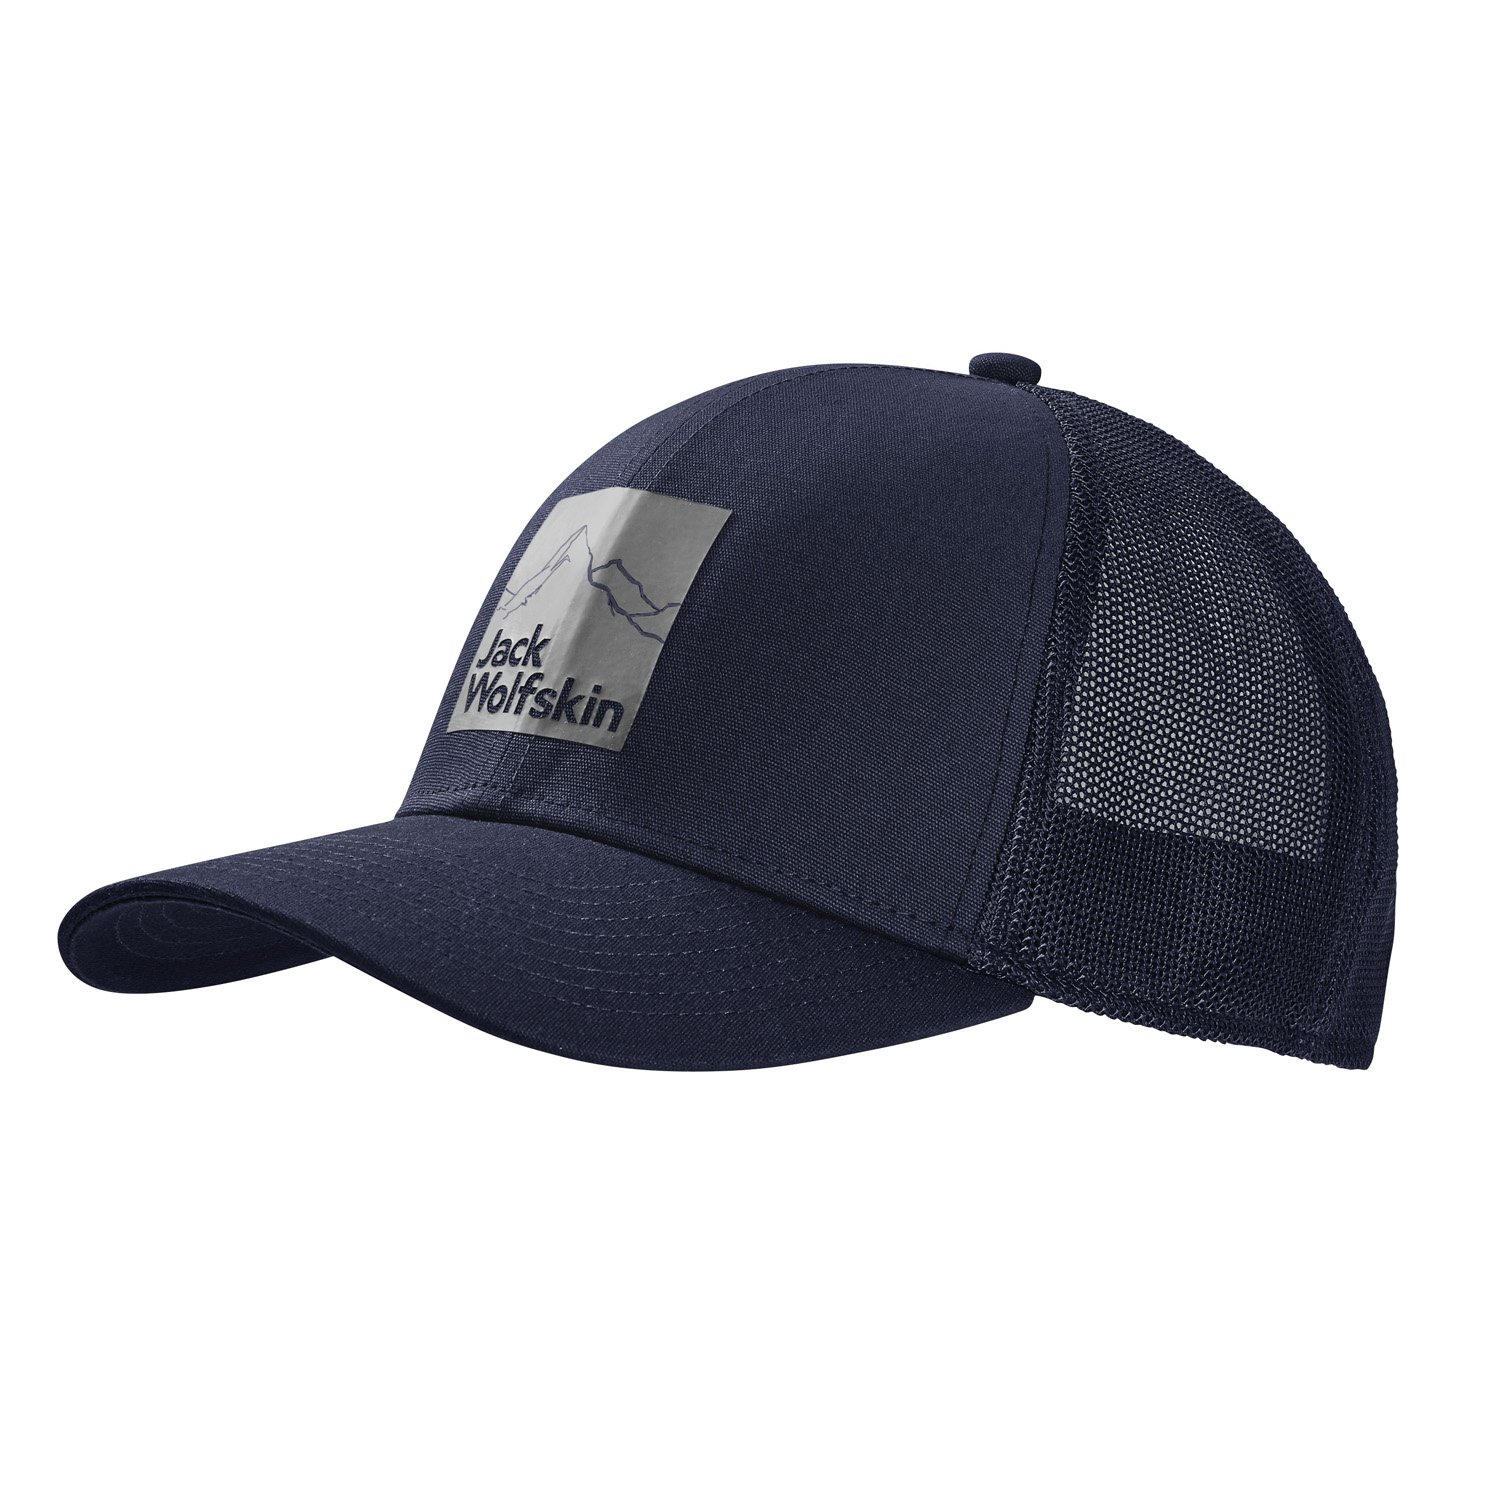 Jack Wolfskin Brand Outdoor Şapka - Lacivert - 1